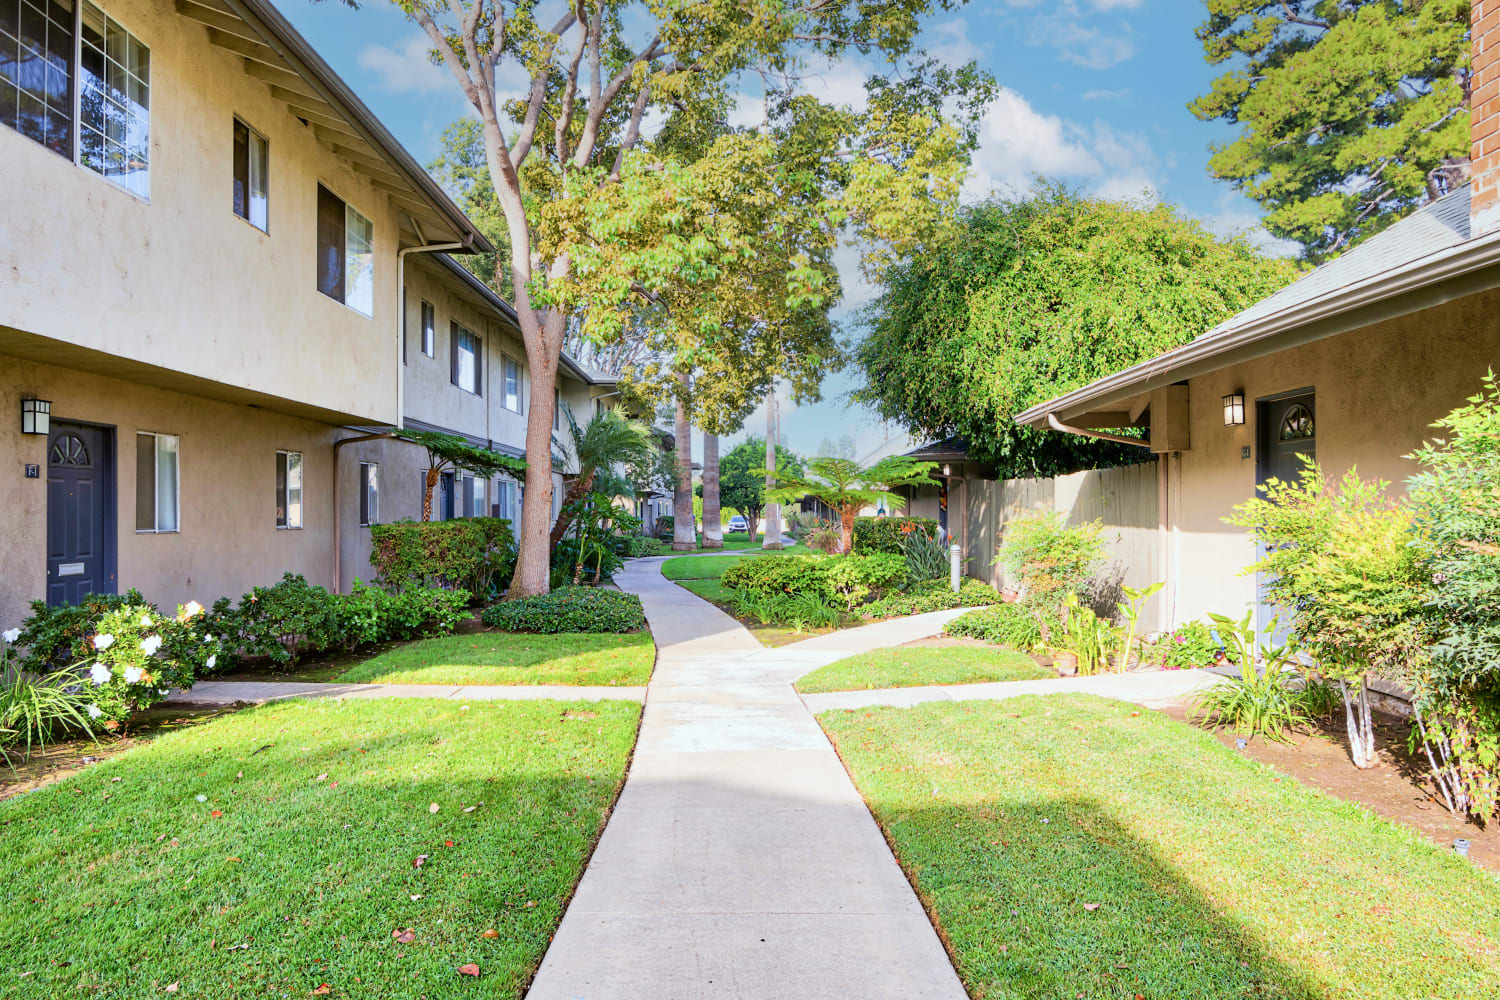 Apartment homes for rent at Mango Tree in Santa Ana, California